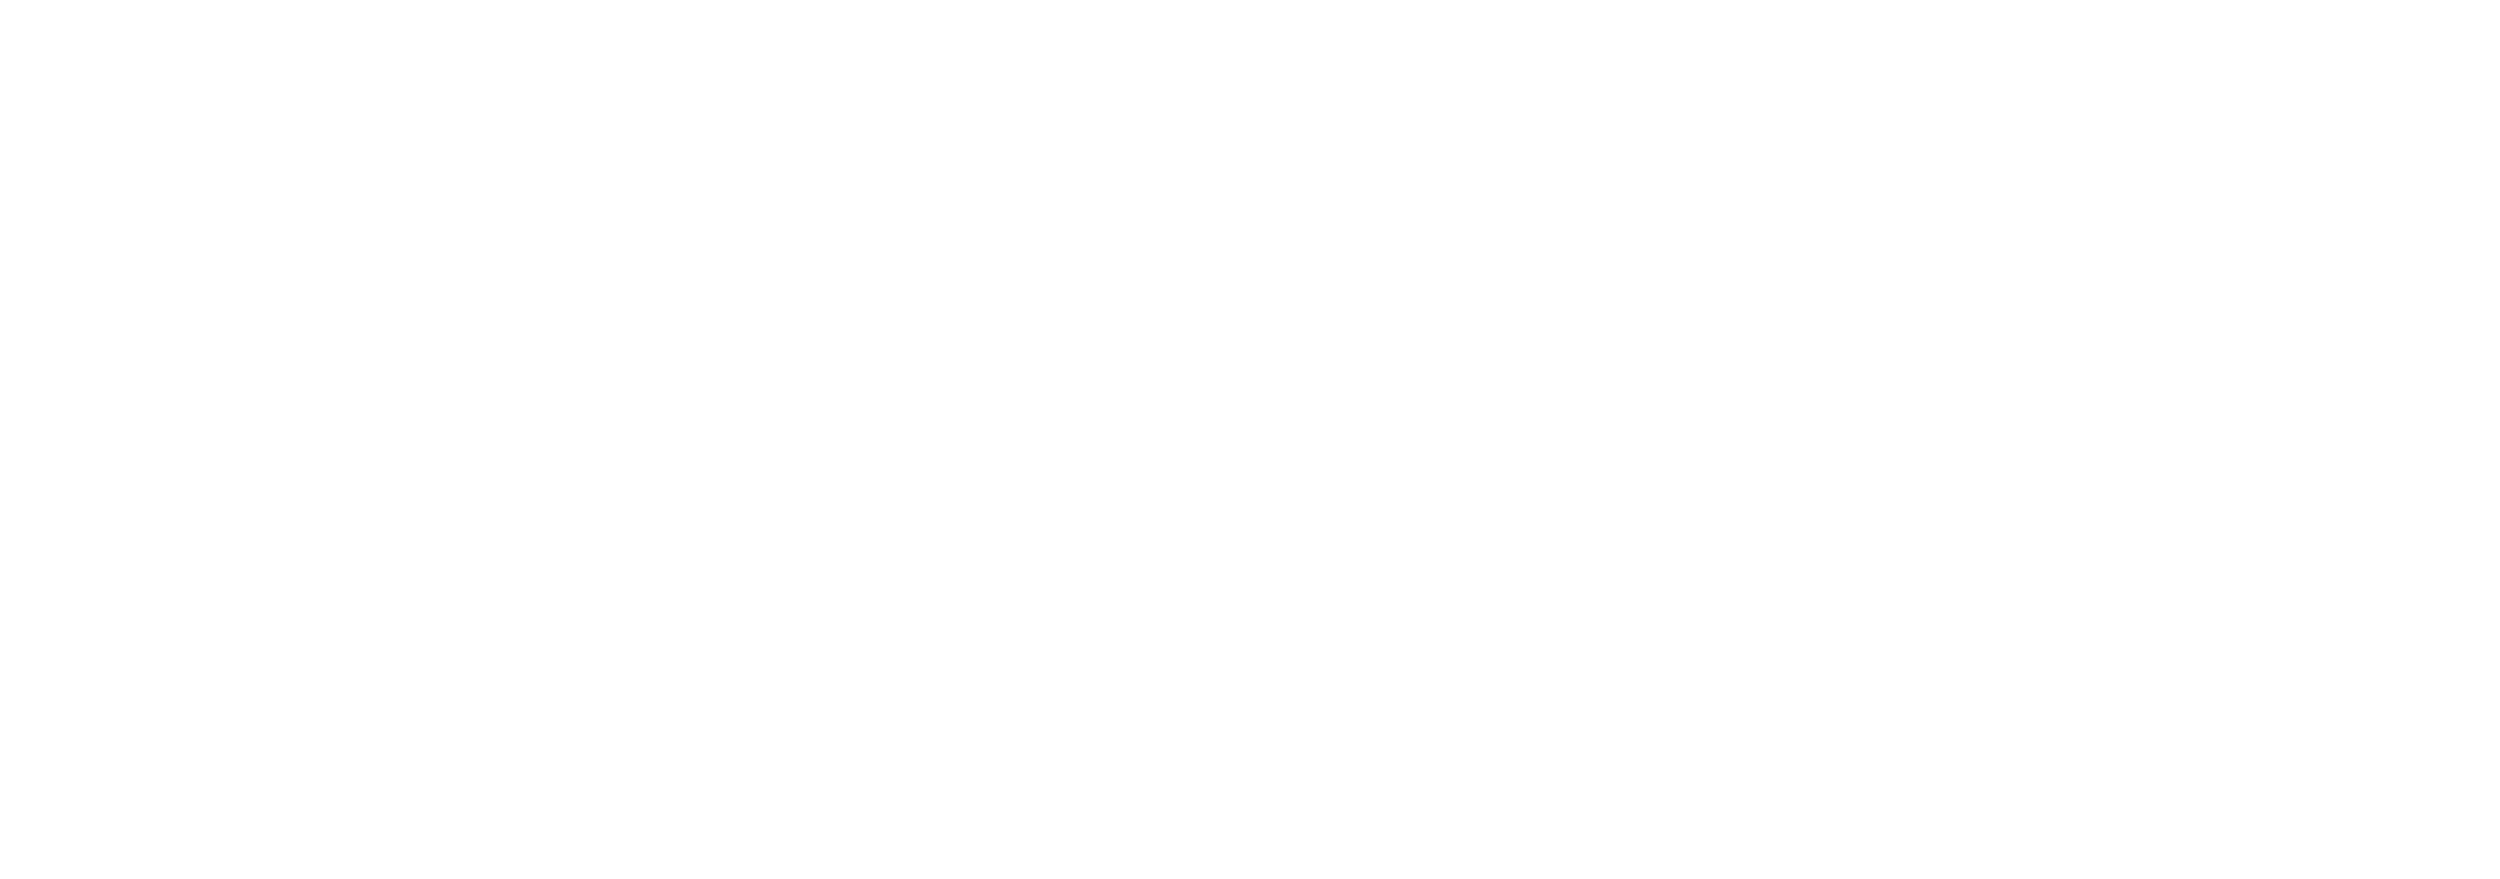 Cedar Valley Design